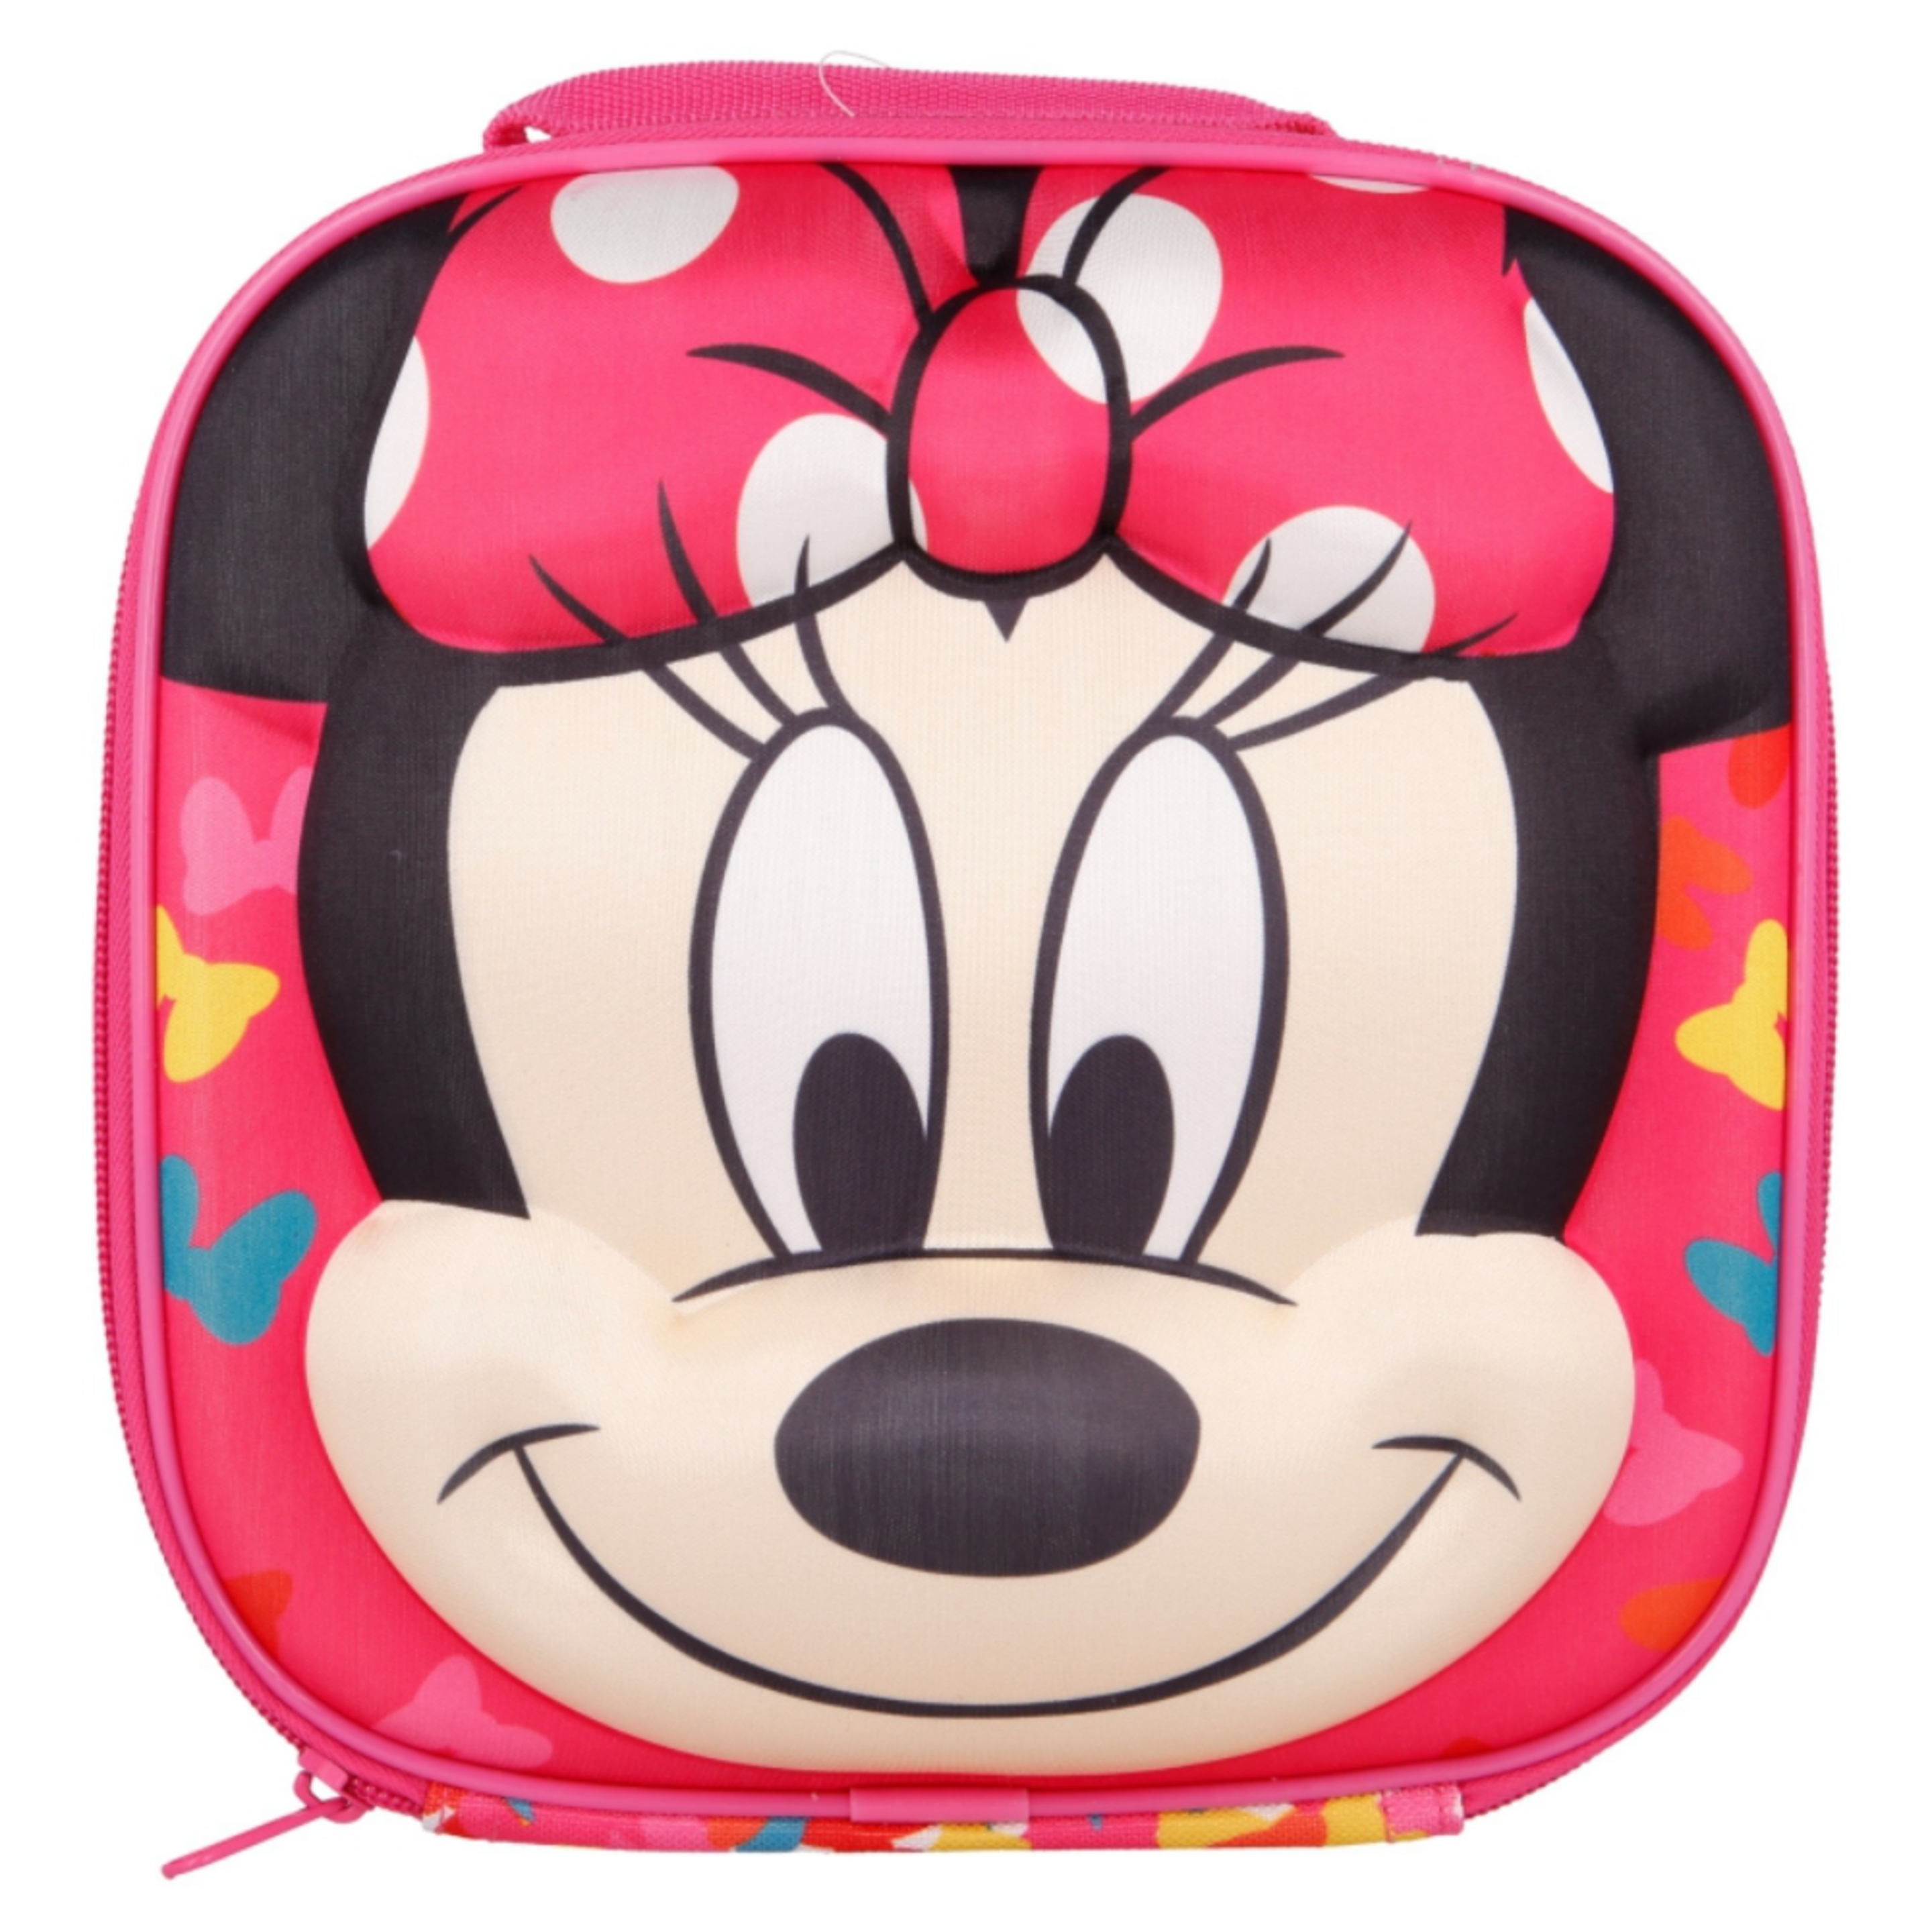 Bolsa Portaalimentos Minnie Mouse 65977 - rosa - 